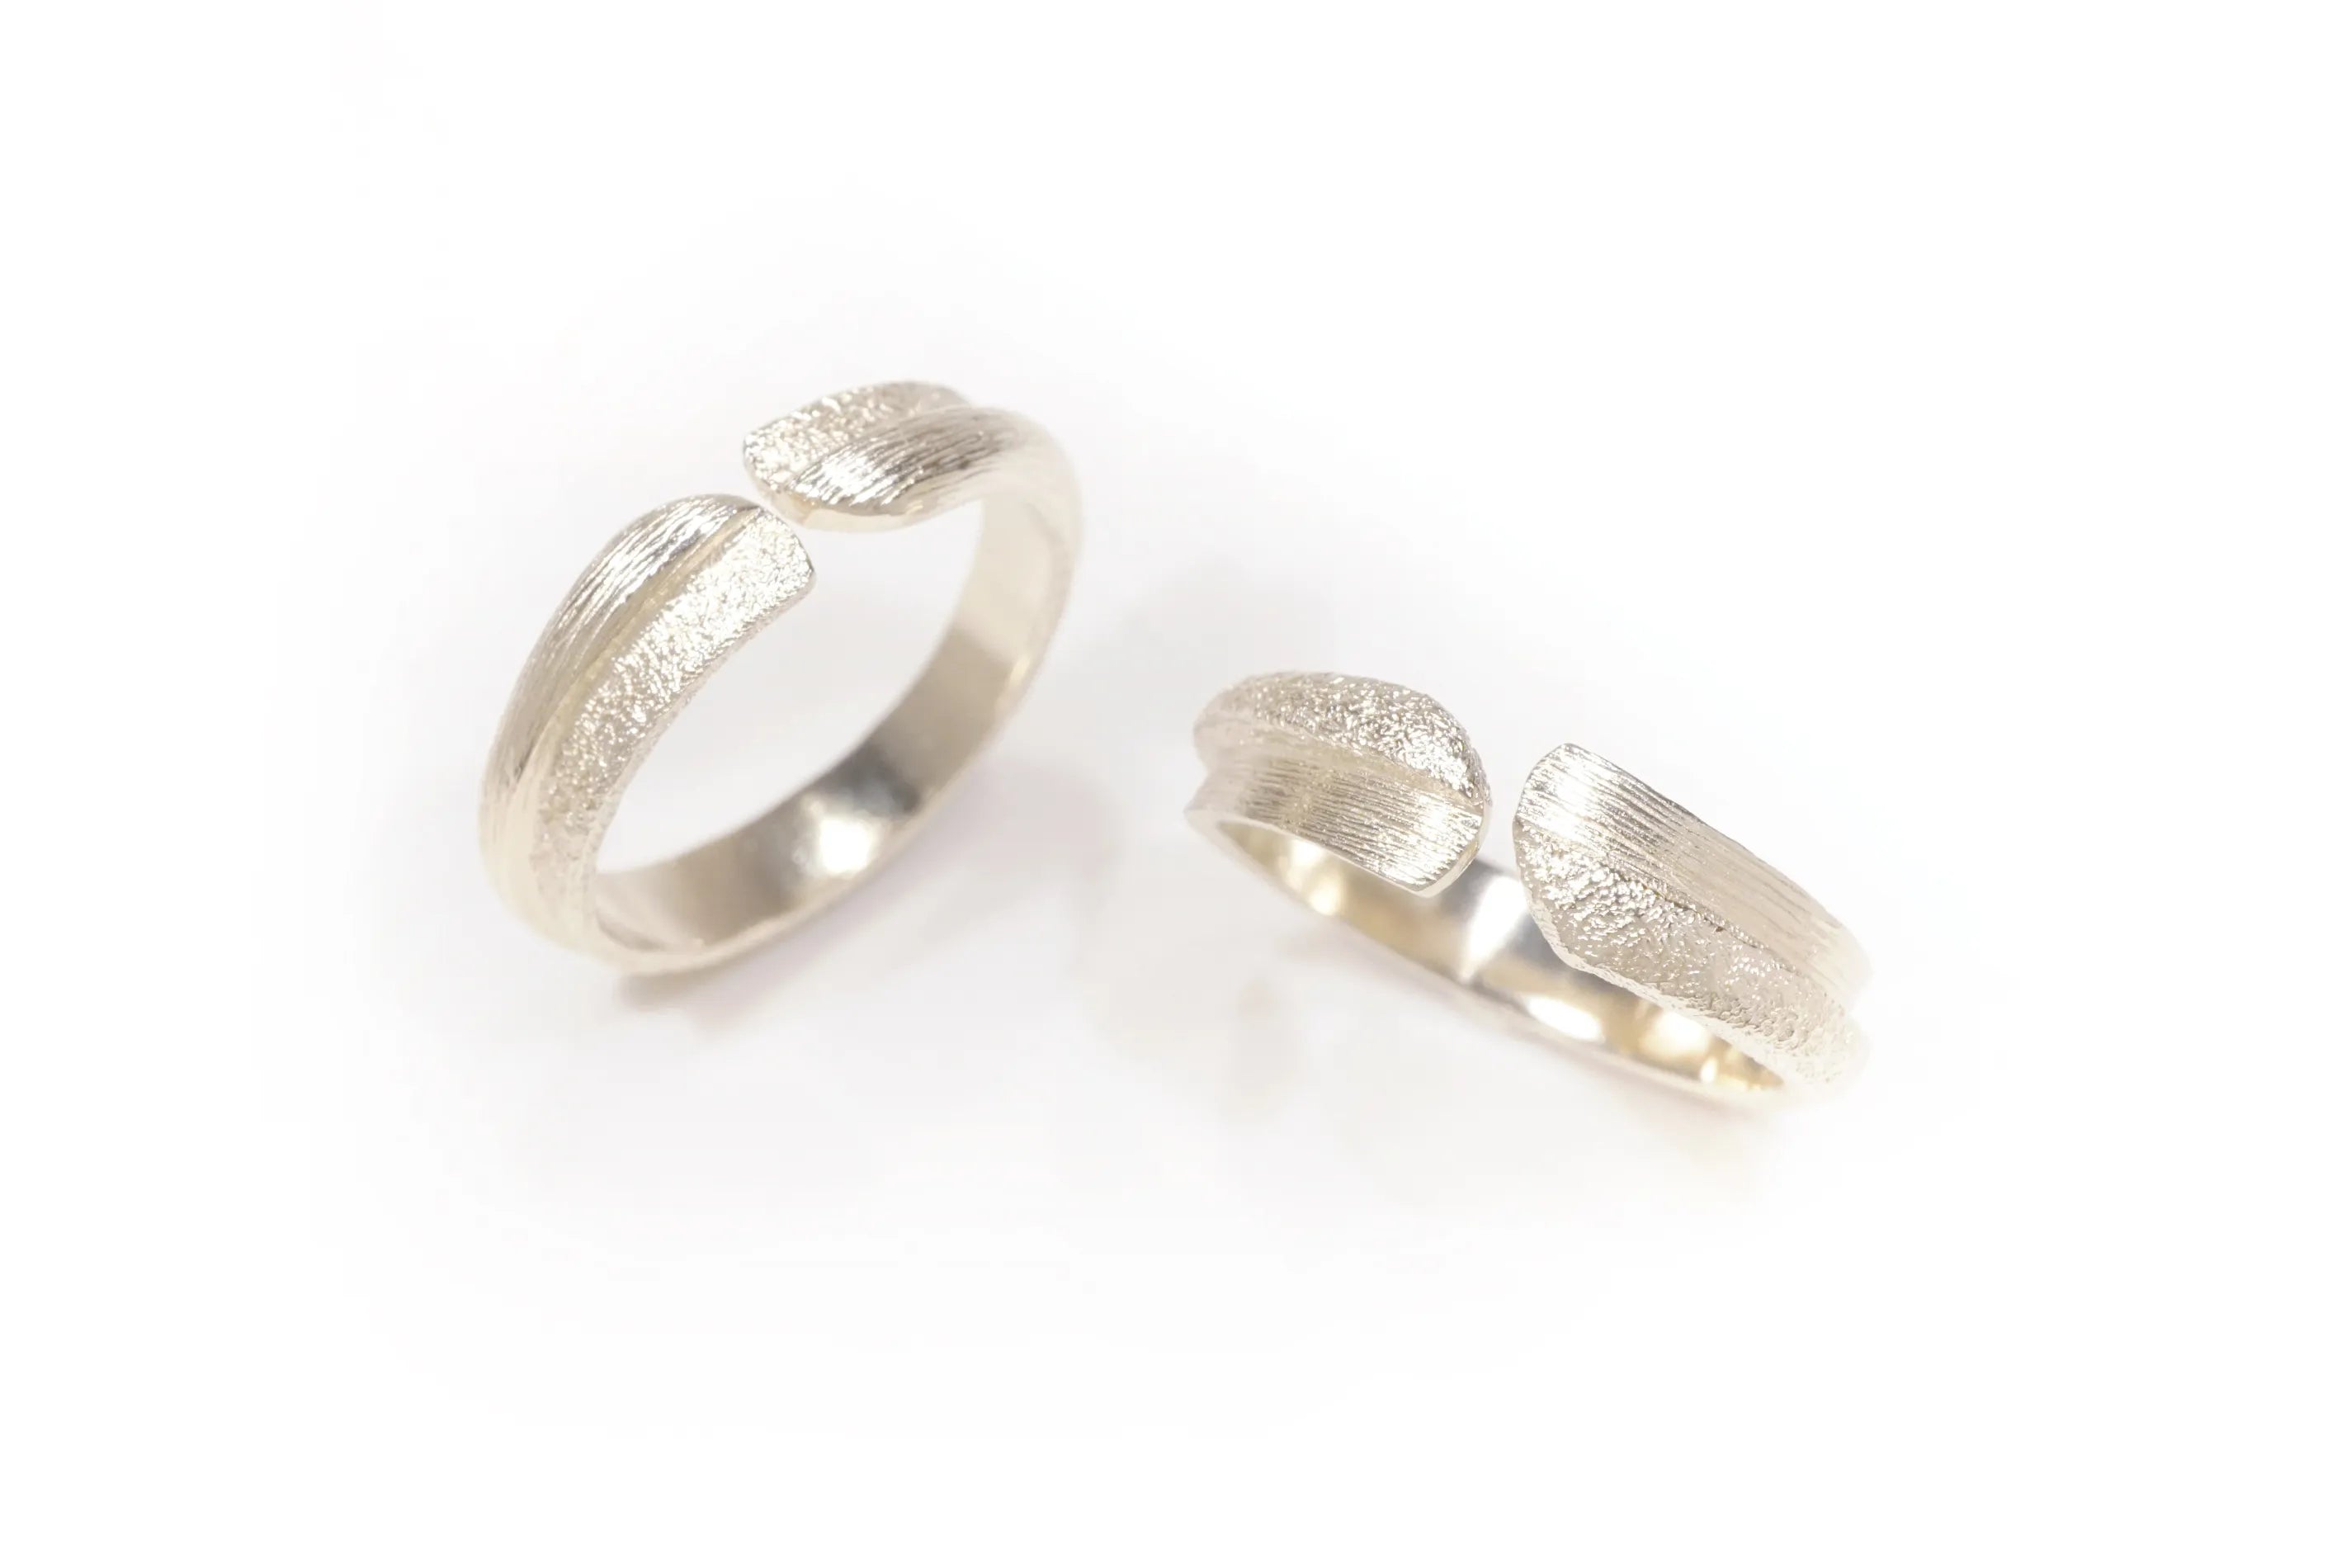 Chia Jewelry客製化k金婚戒對戒，以擁抱為主題的獨特簡約婚戒設計，可調式婚戒採用14k金製作